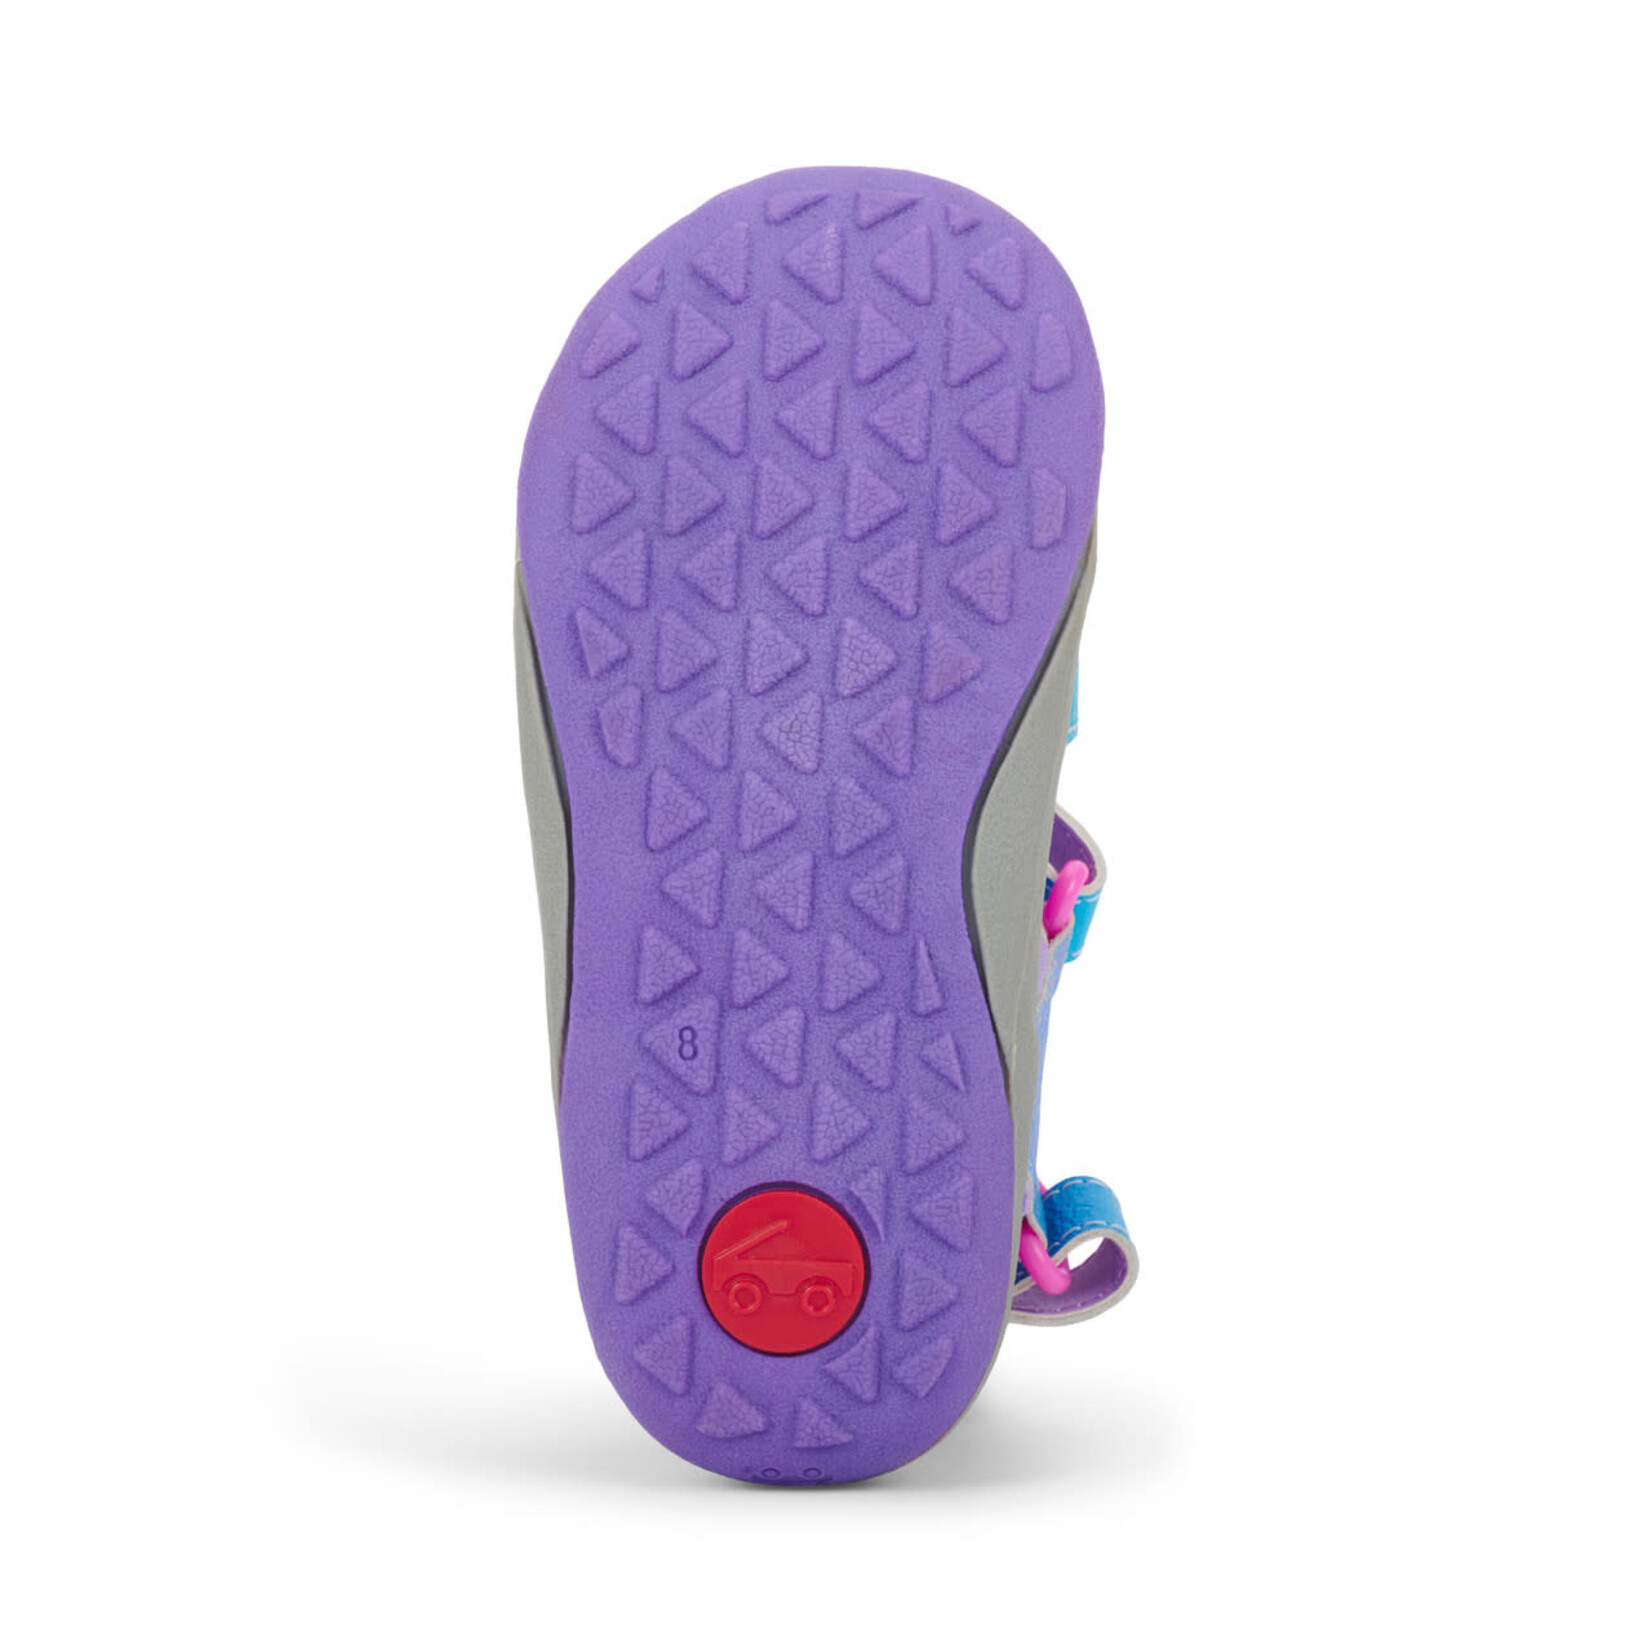 See Kai Run SEE KAI RUN - Closed-toe water resistant sandals 'Paley II - Blue / Lavender'